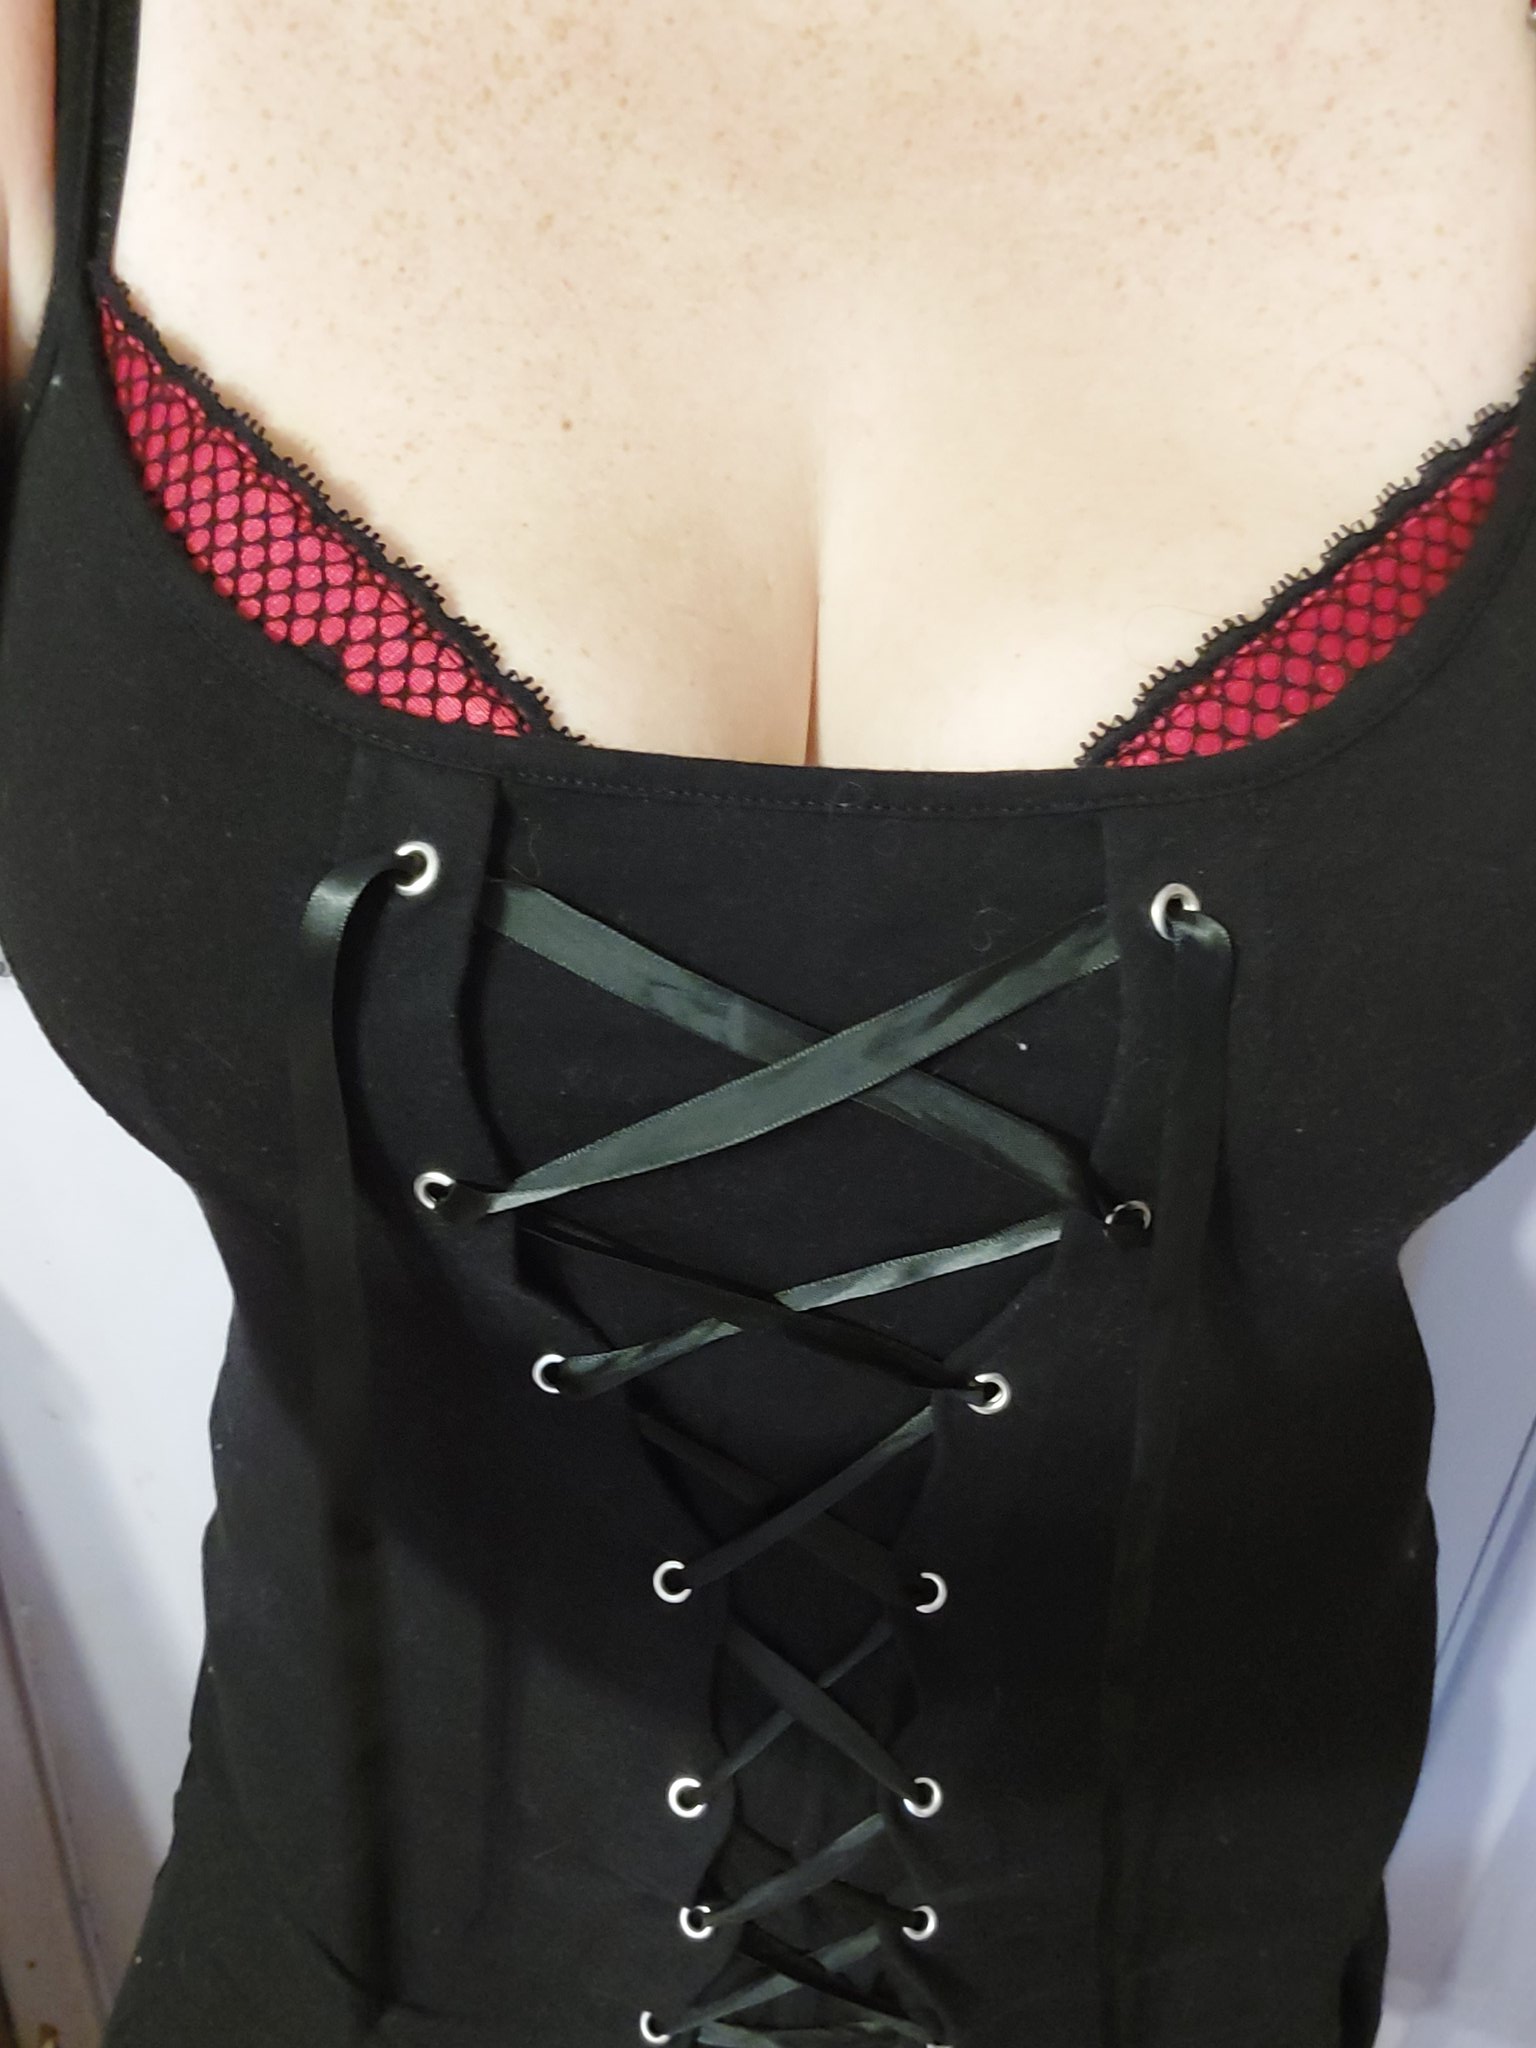 sparklygal85 on X: New top, new bra 😁 #annsummers #boobs #figure #natural  #40f #gothic #corset #emp #sparklygal  / X